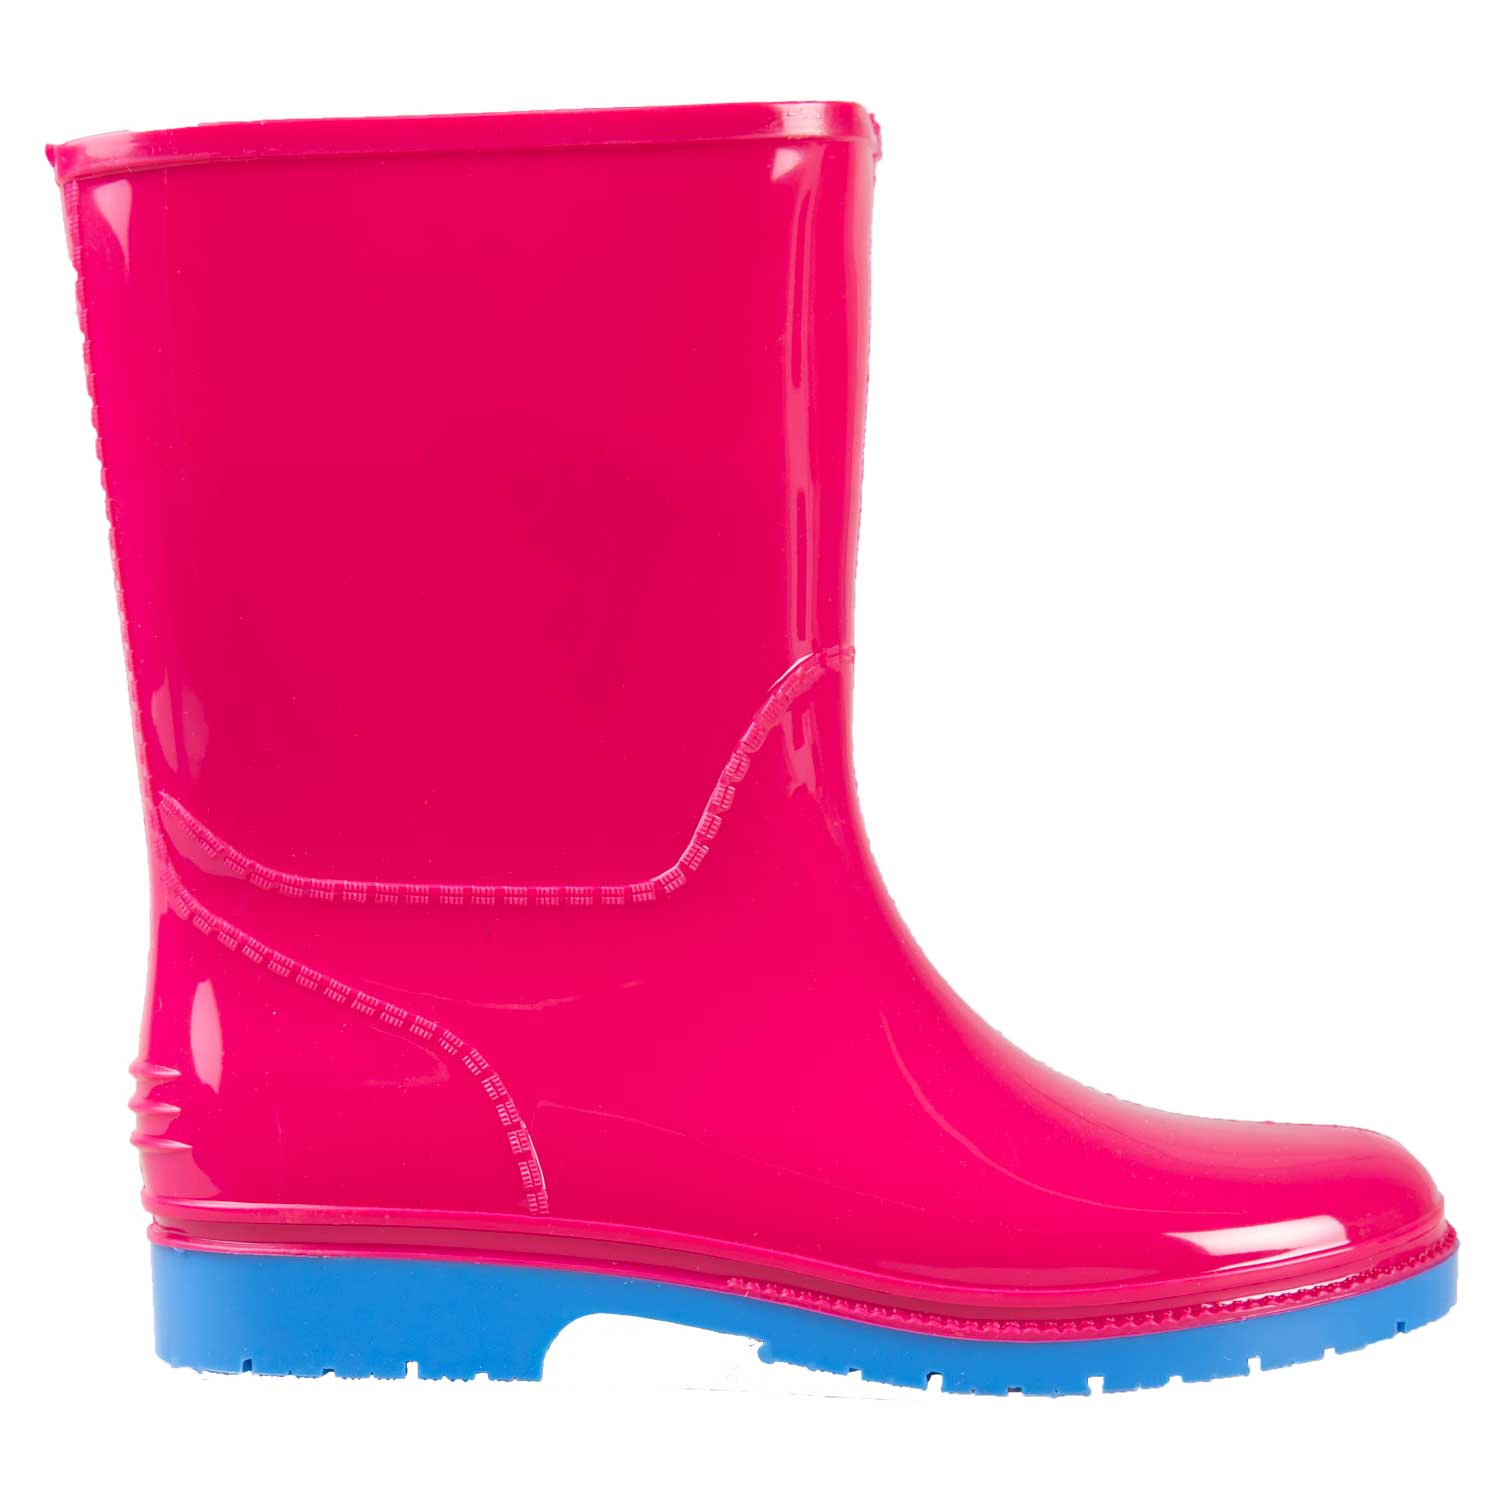 Rubber rain boots - Fuschia, size 2